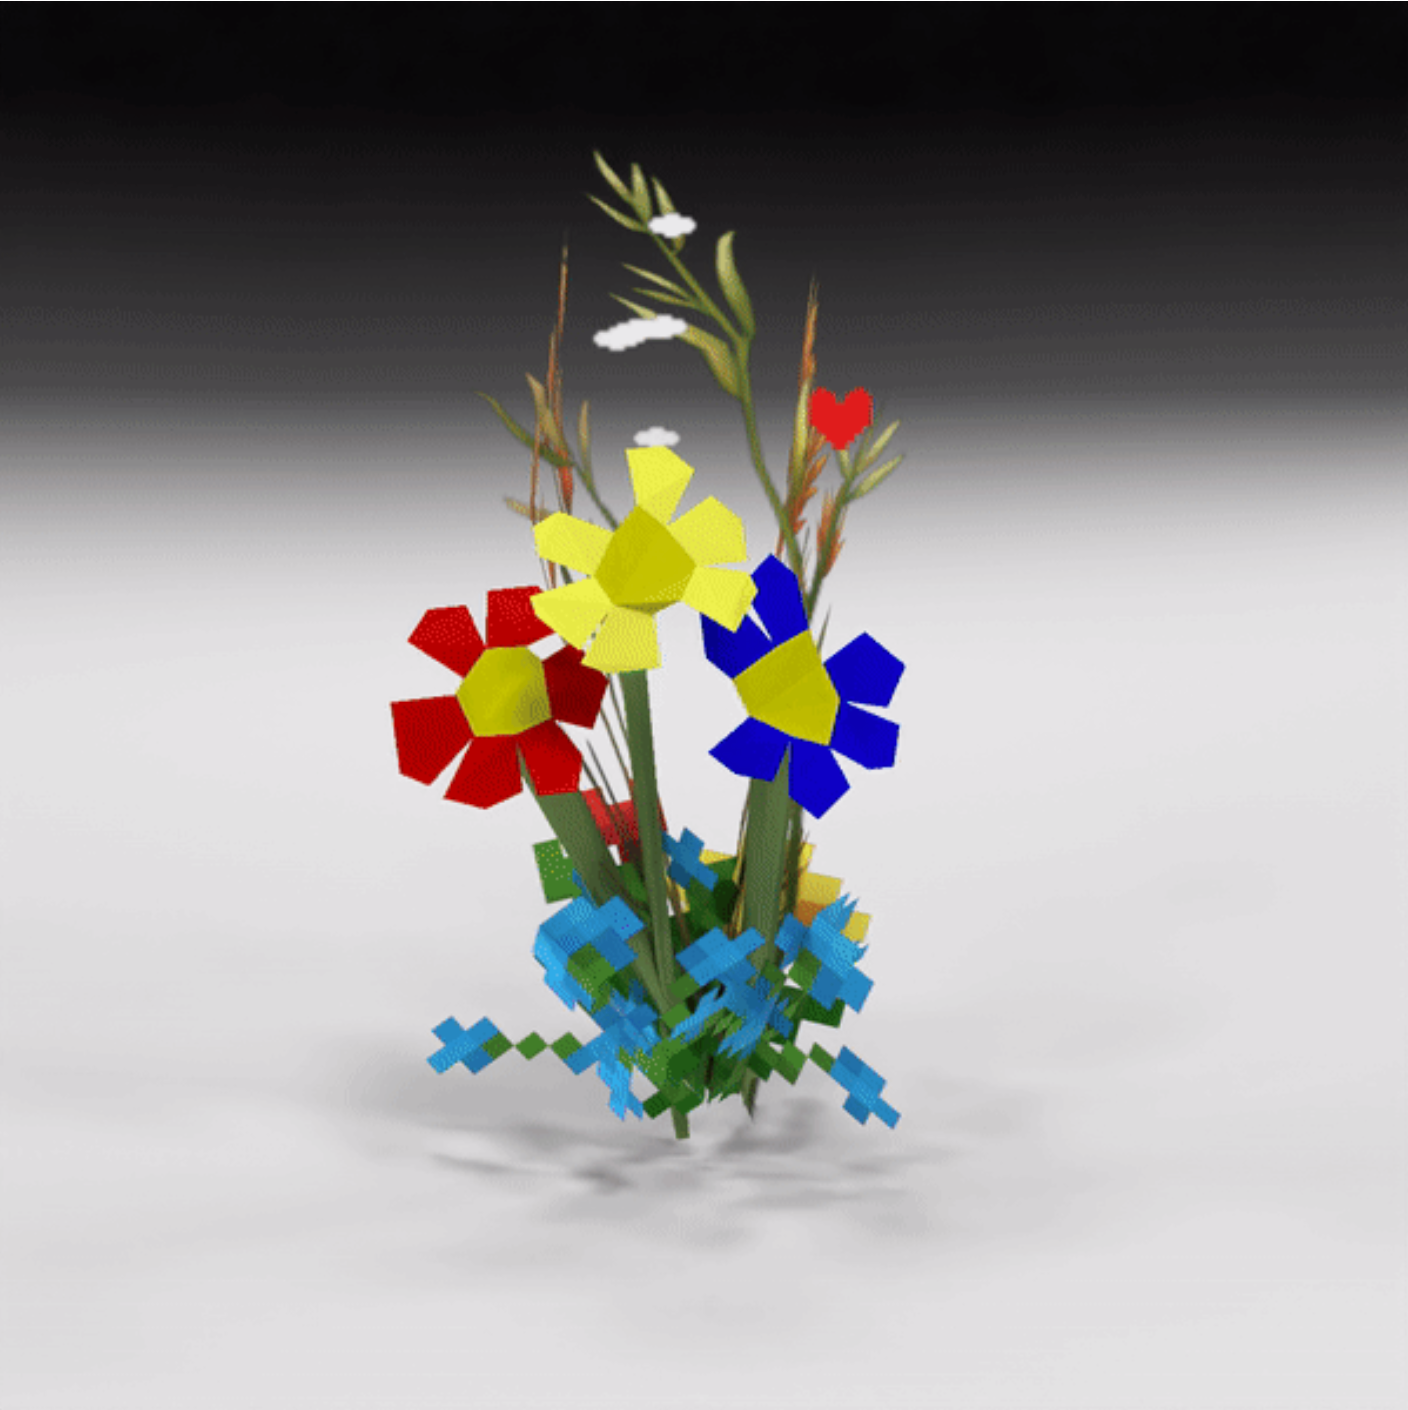 Jill Magid x Artwrld present “Out-Game Flowers”